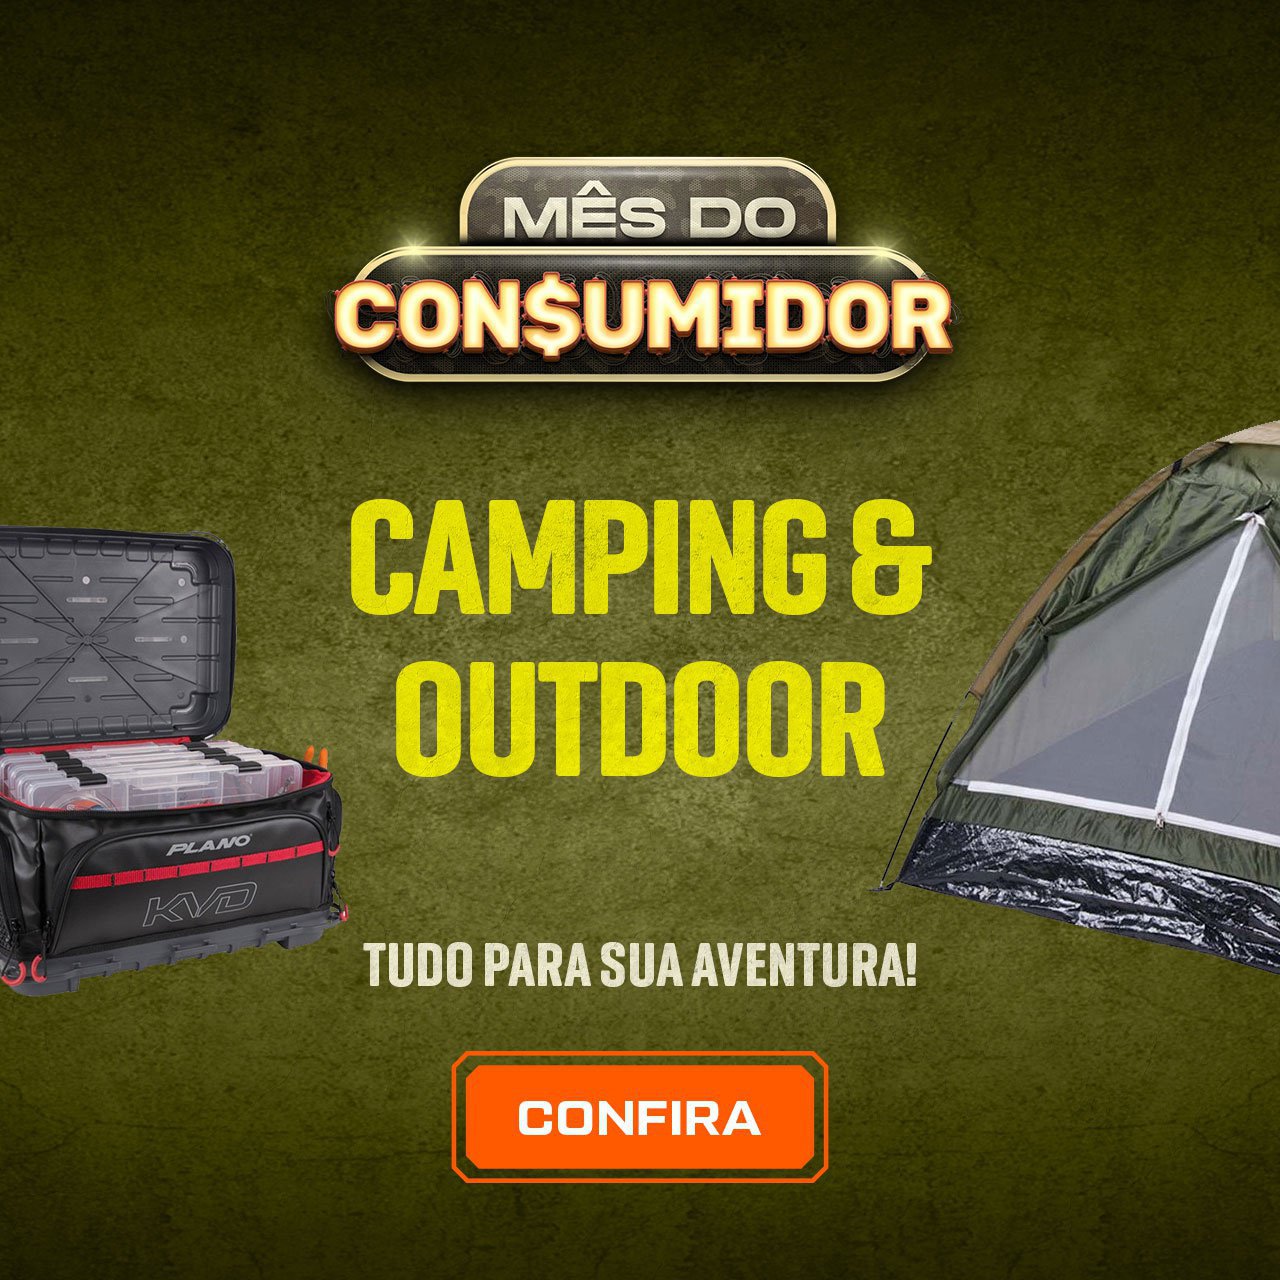 Camping & Outdoor - TUDO PARA SUA AVENTURA!